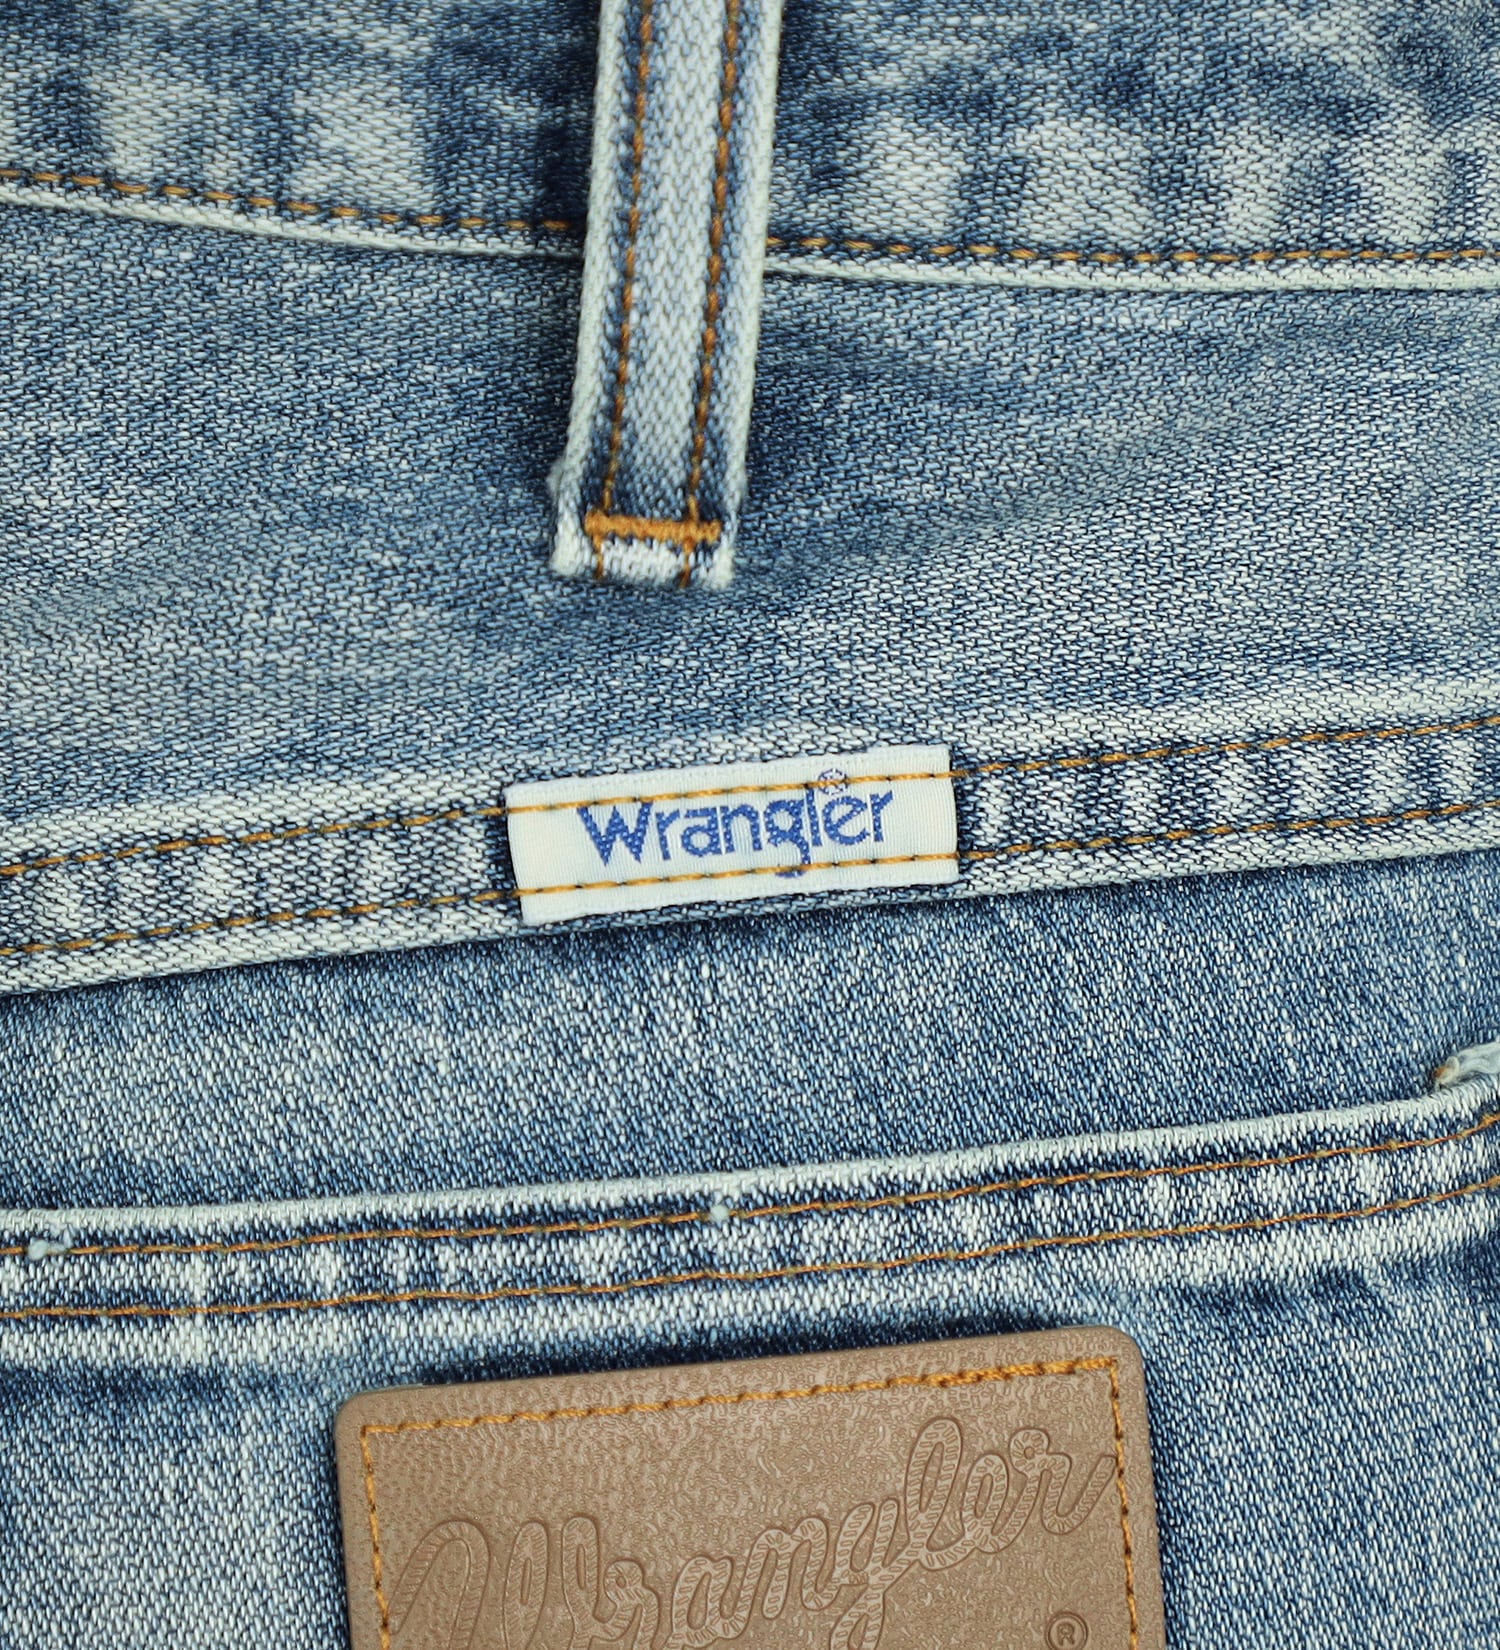 Wrangler(ラングラー)の【GW SALE】US ORIGINALS/フレアパンツ|パンツ/デニムパンツ/メンズ|中色ブルー